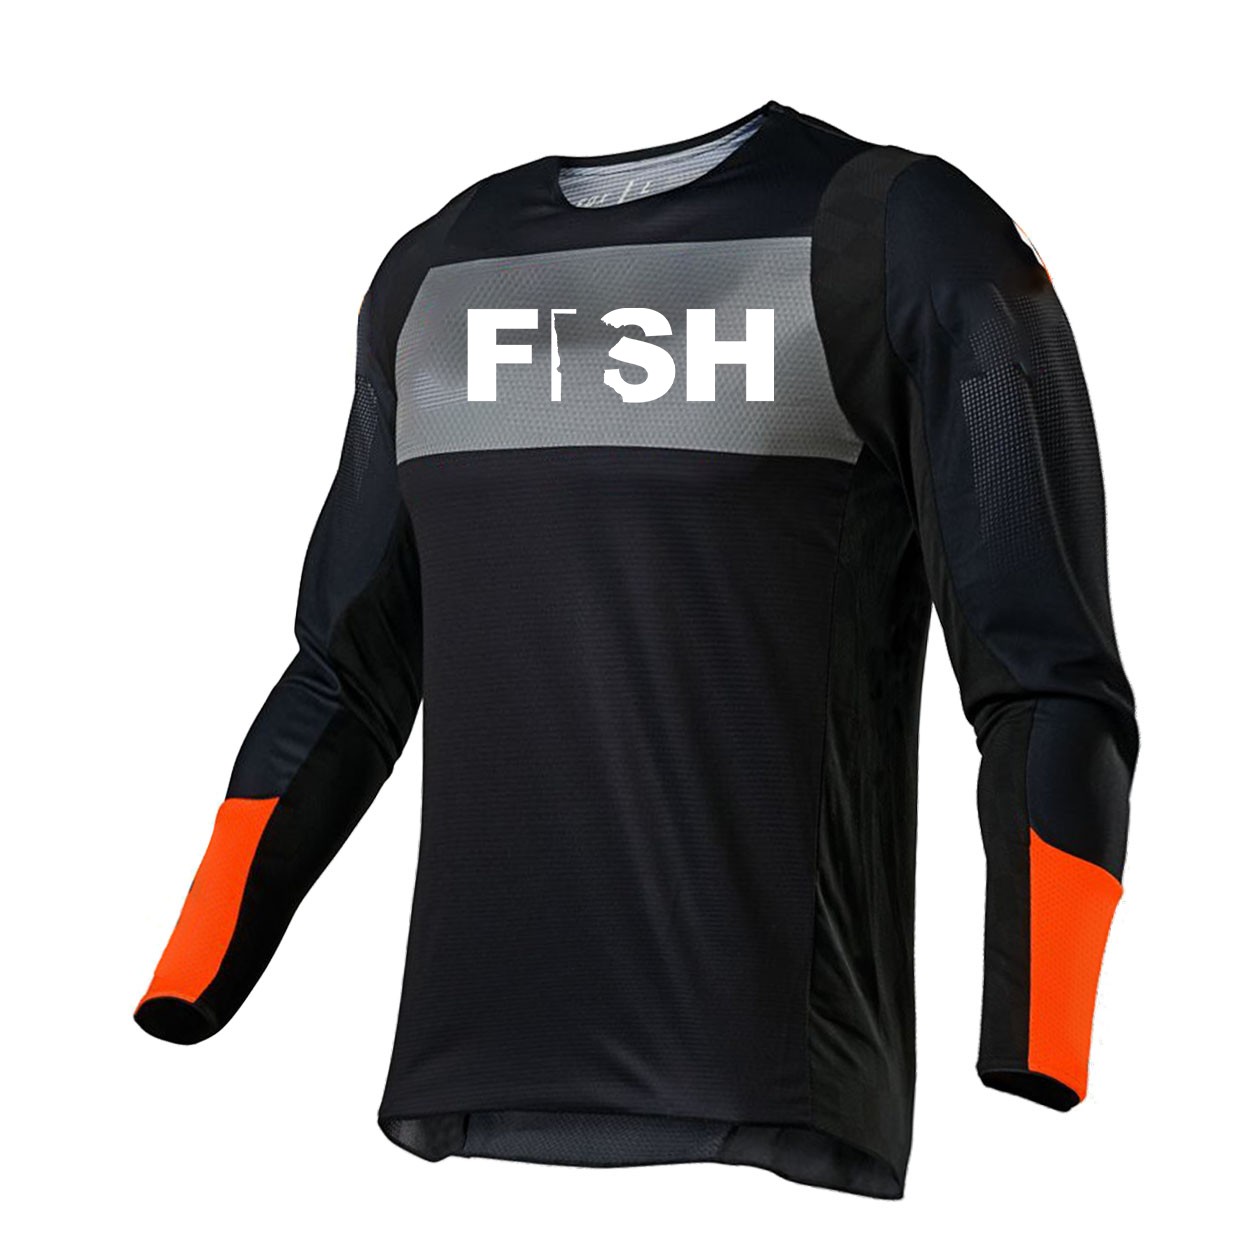 Fish Minnesota Classic Performance Jersey Long Sleeve Shirt Black/Gray/Orange